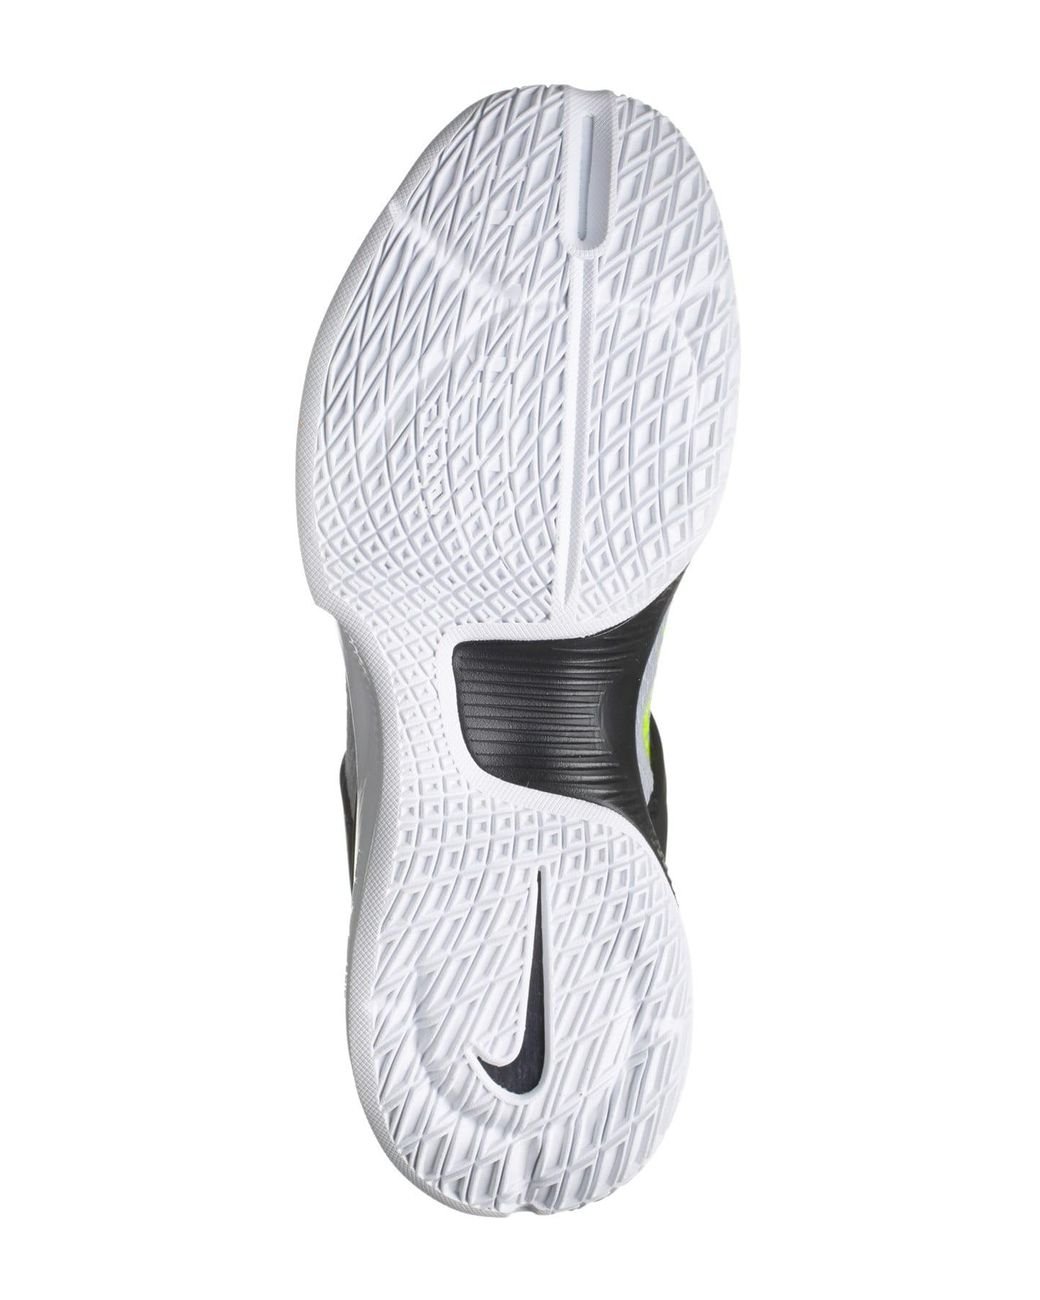 Adecuado Araña de tela en embudo capitán Nike Air Zoom Hyperattack Volleyball Shoe in Gray | Lyst